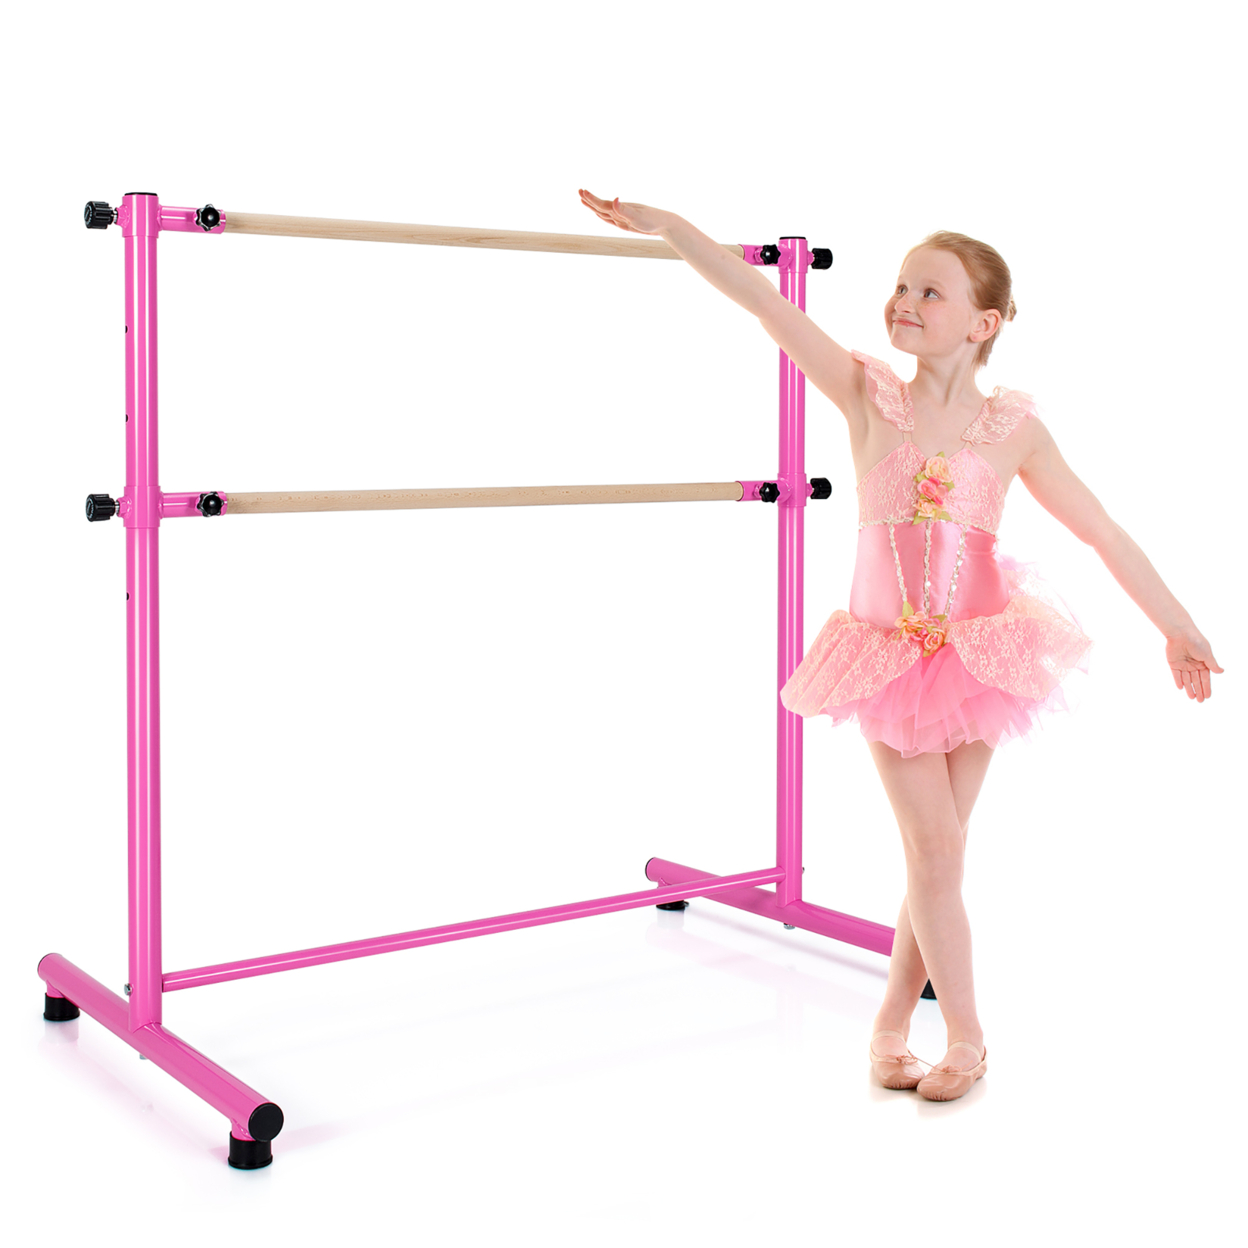 Portable 4FT Freestanding Double Dancing Ballet Barre Bar W/ 5 Adjustable Heights - Purple